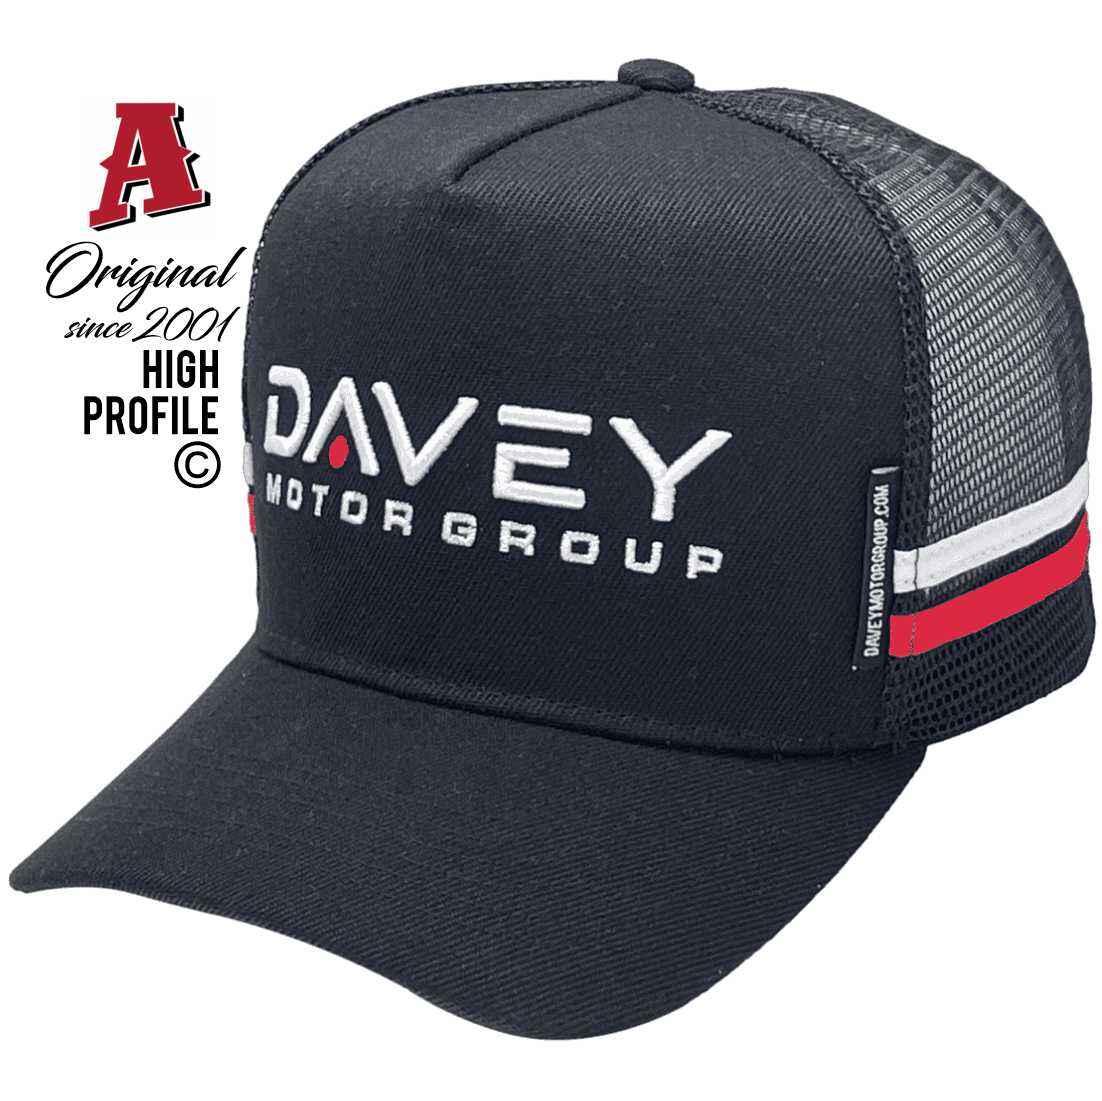 Davey Motor Group Breakwater VIC Basic Aussie Trucker Hats with Australian HeadFit Crown Double SideBands Black Snapback